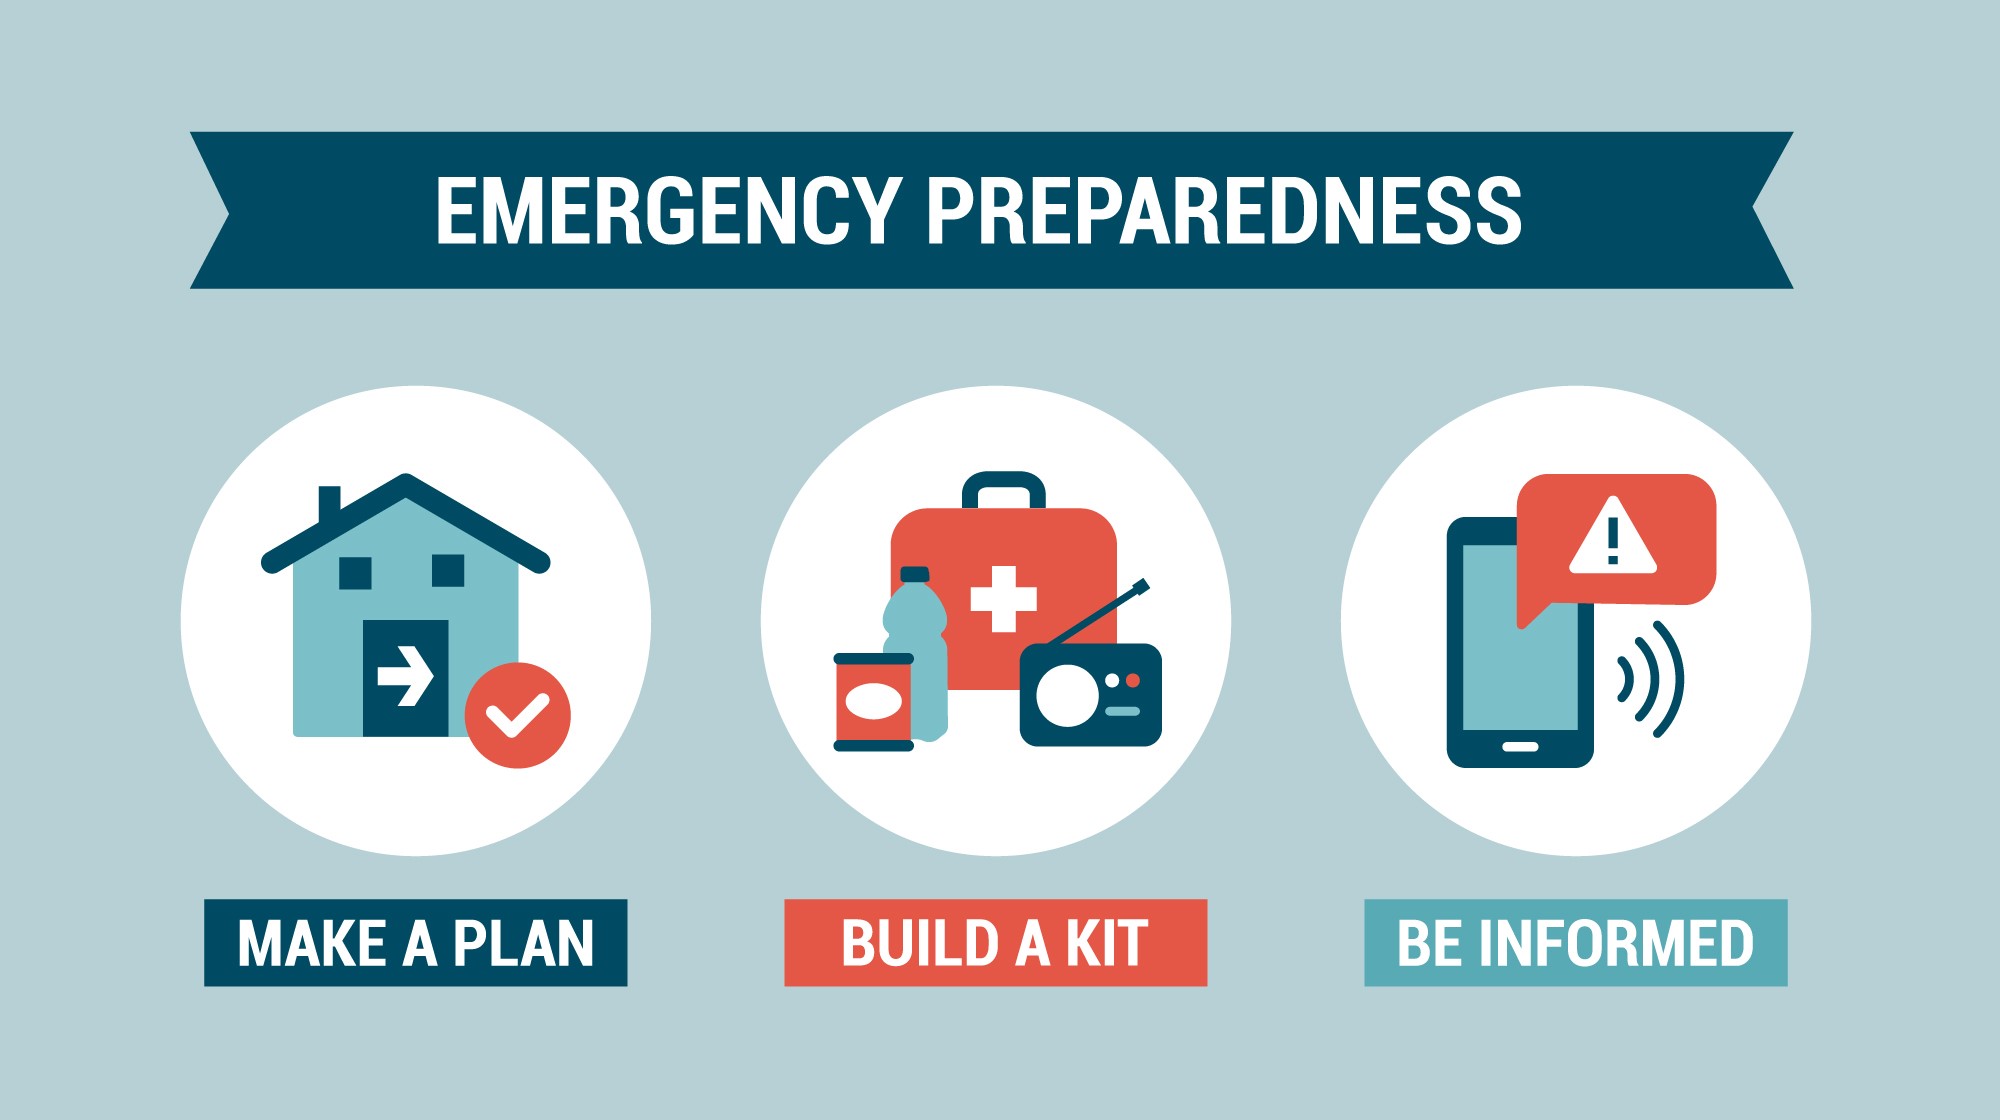 Kits for Kids Program Will Enhance Emergency Preparedness at Local Schools